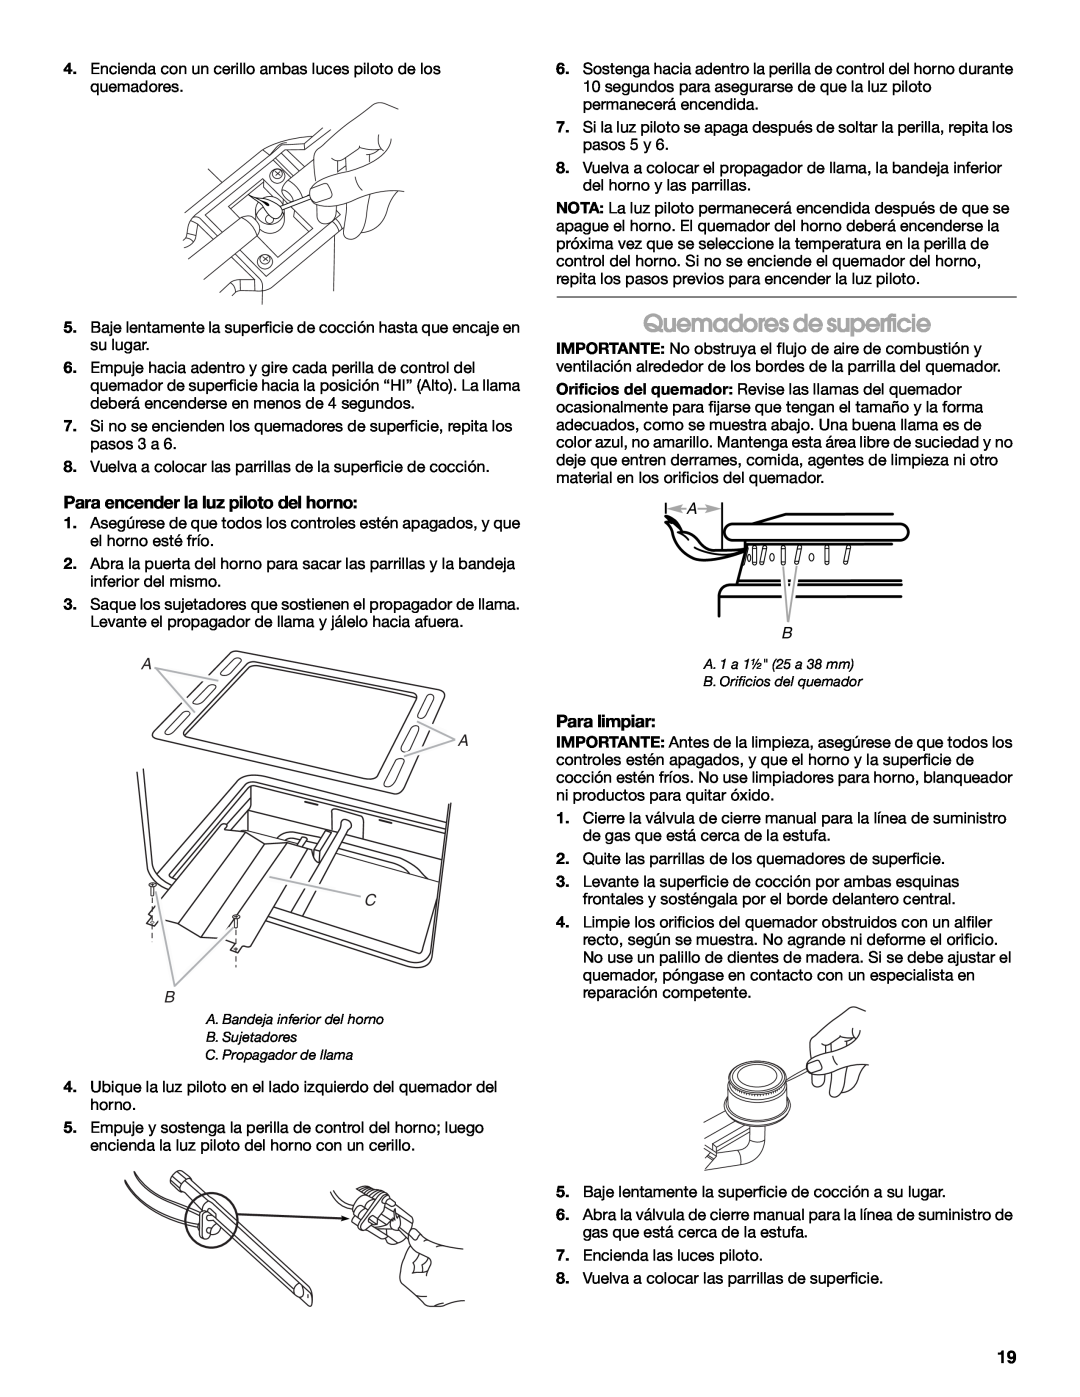 Estate W10173325A manual Quemadores de superficie, Para encender la luz piloto del horno, Para limpiar, A A C B 